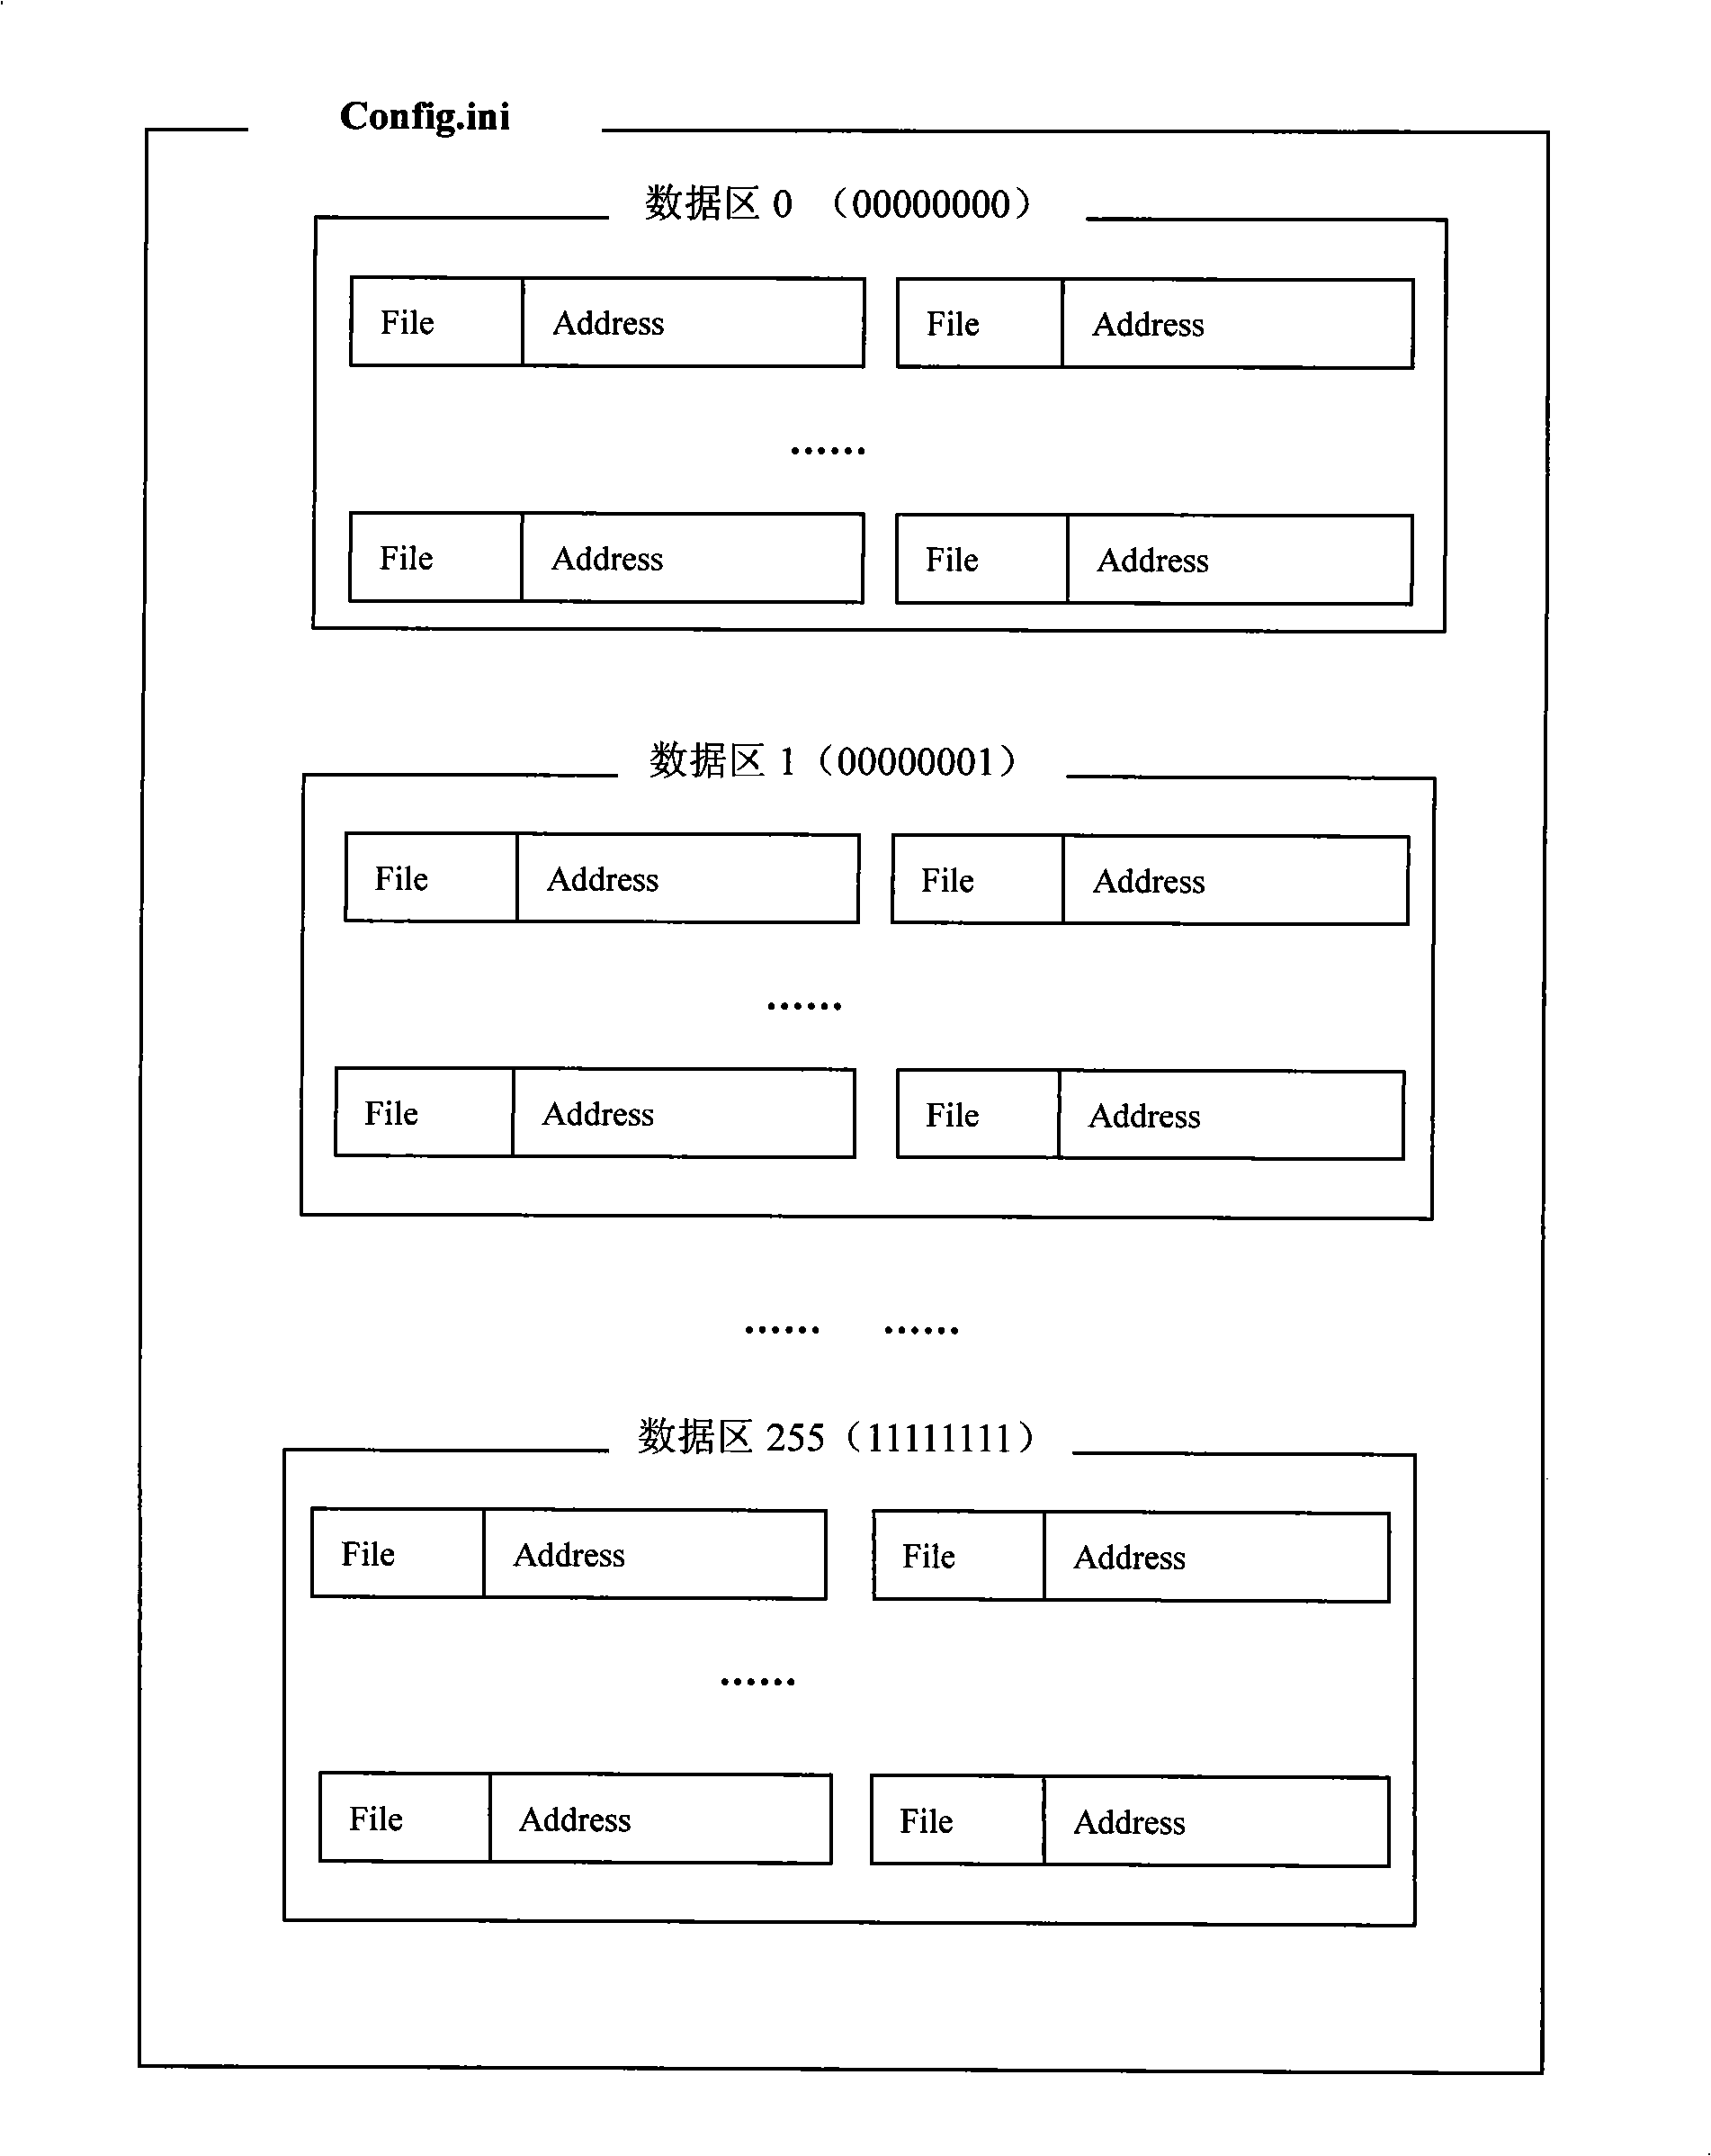 Symmetric ciphering method having infinite cipher key space